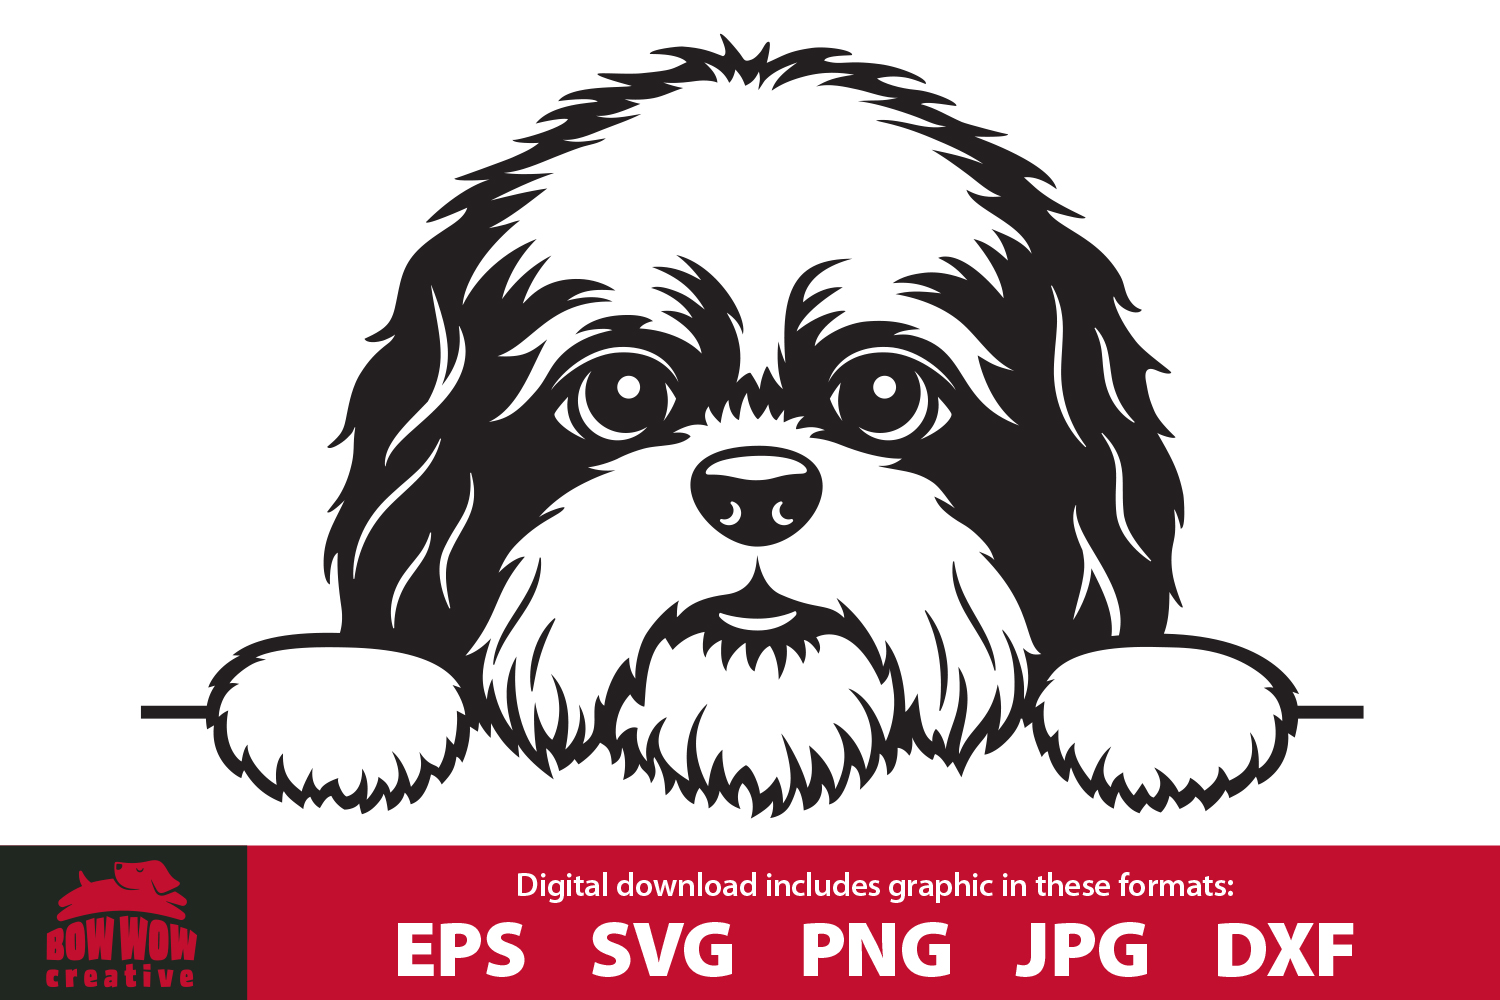 Peeking Shih Tzu Puppy- SVG, EPS, JPG, PNG & DXF files